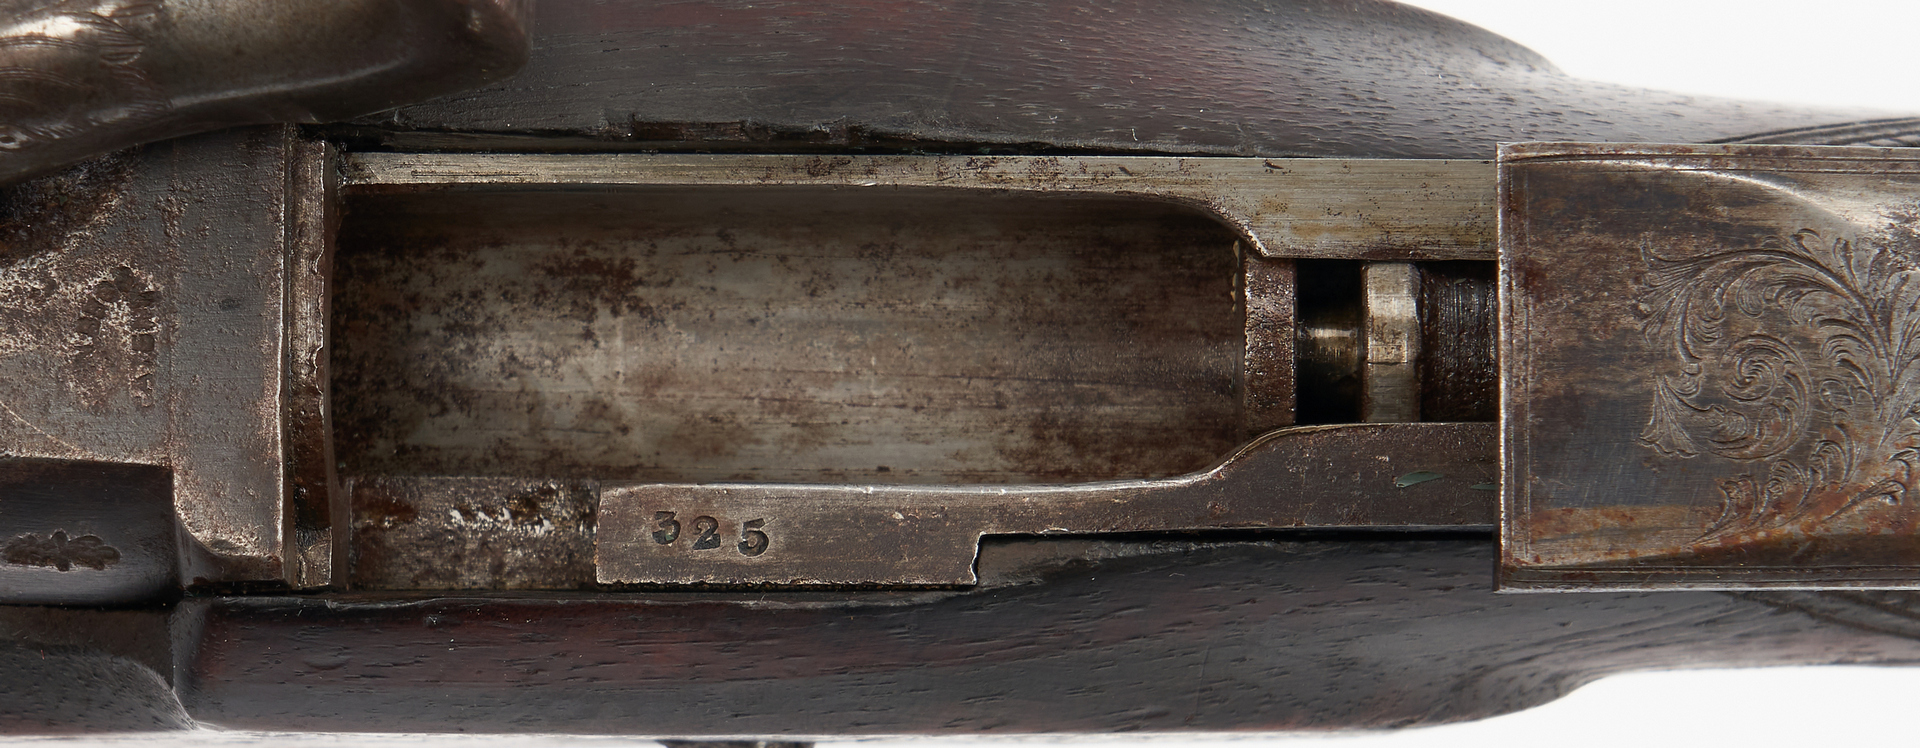 Lot 698: British E.M Reilly & Co. Percussion Carbine, .577 Caliber